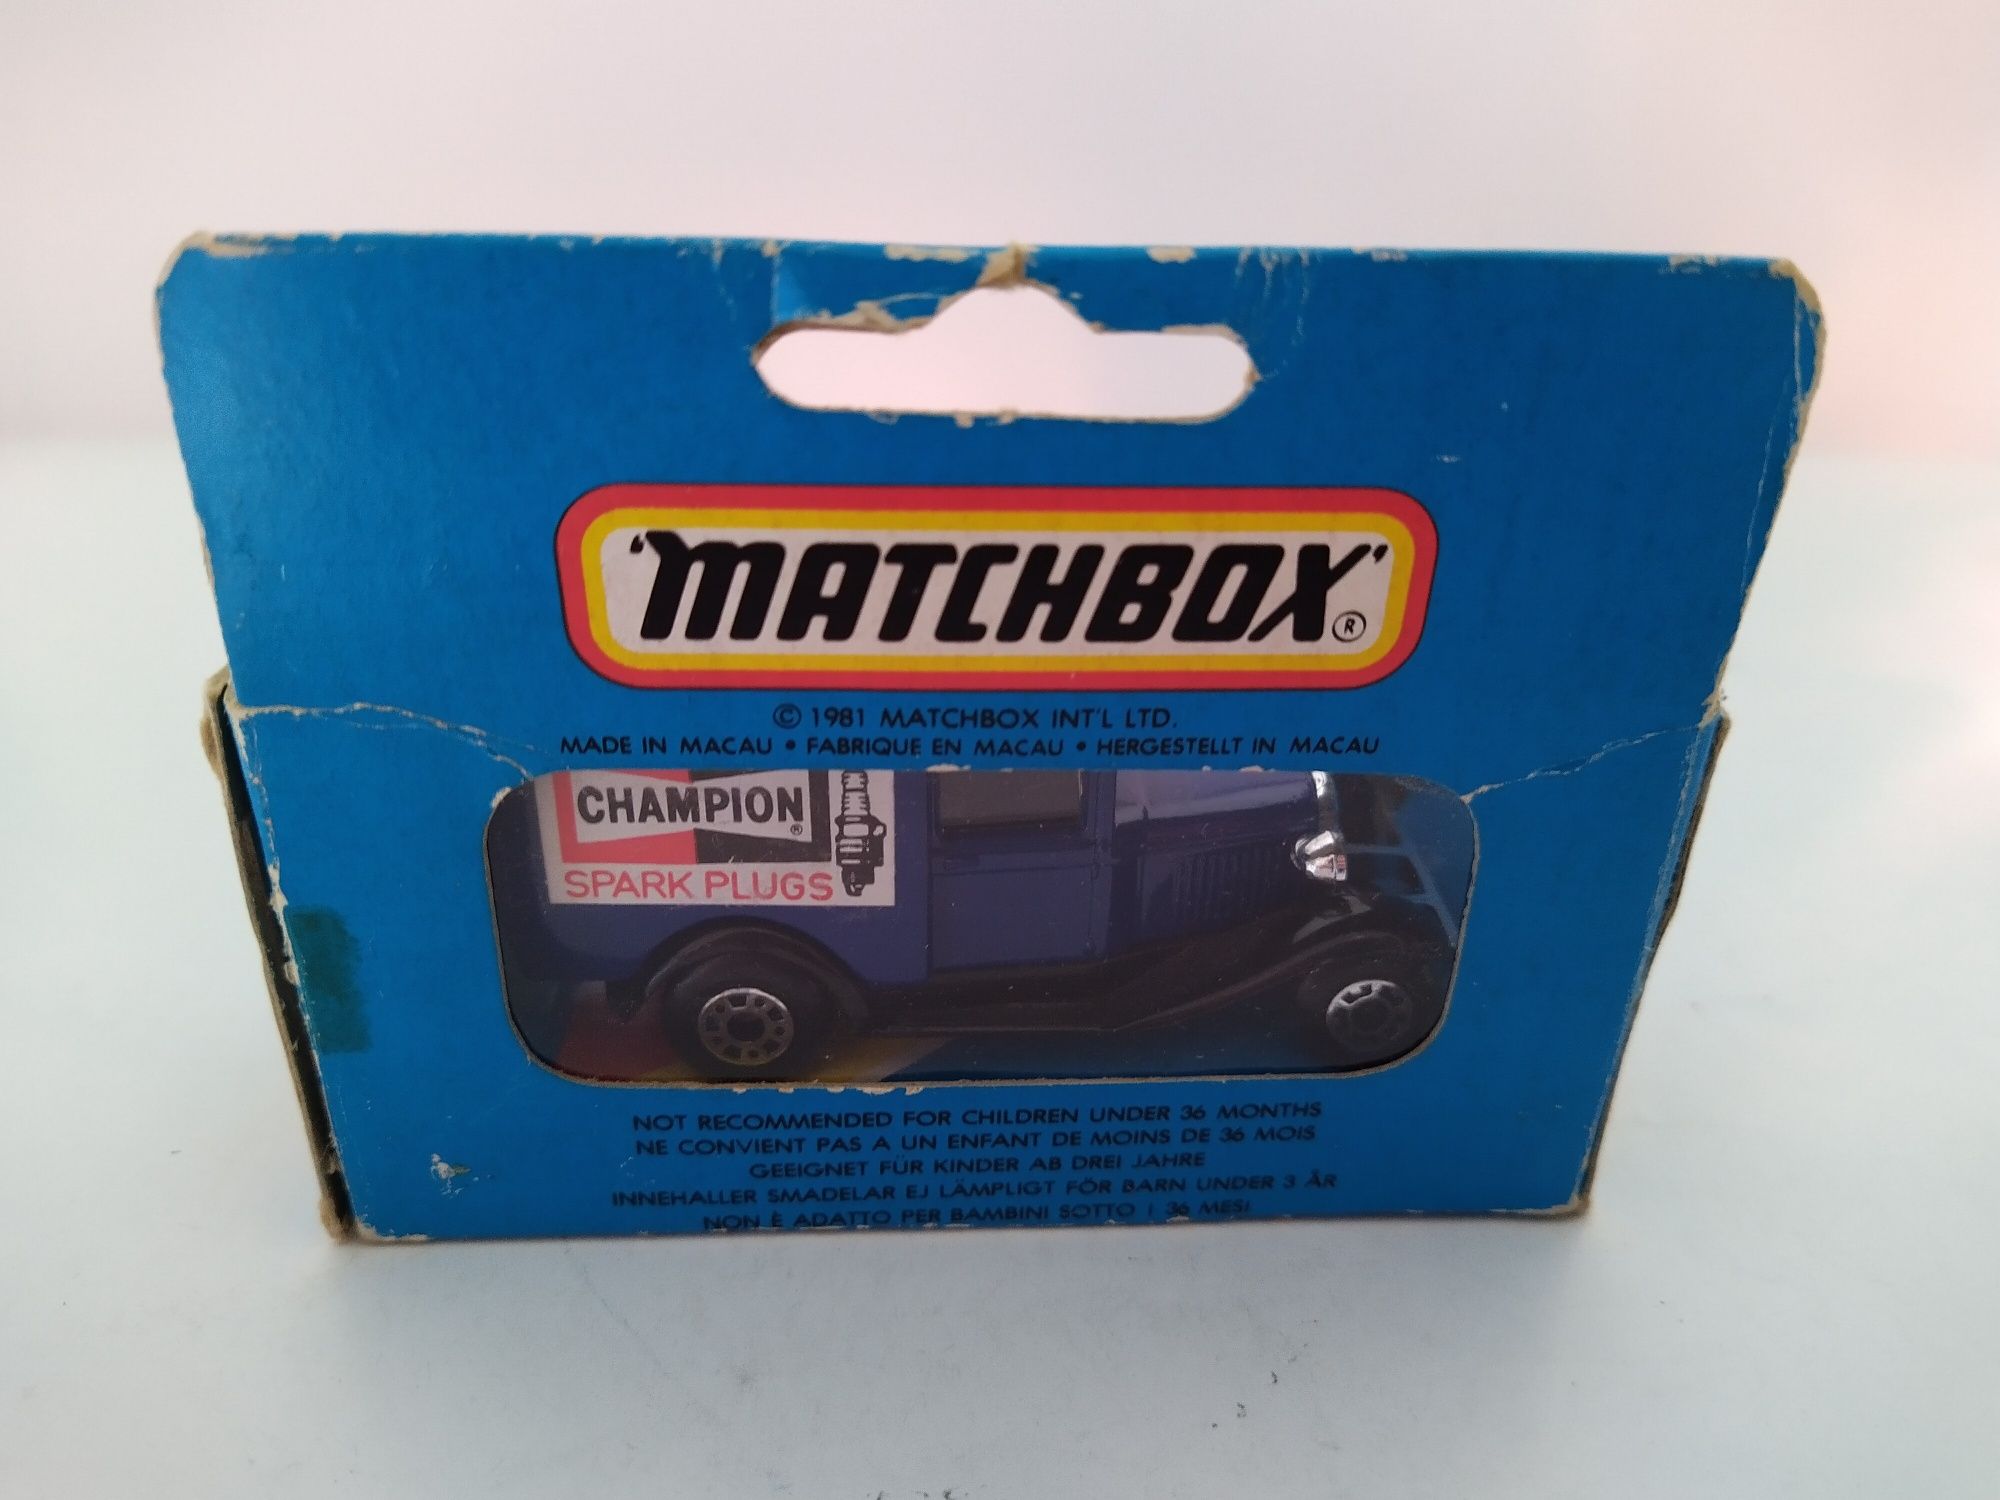 Ford Model A MB 38 + pudełko Matchbox